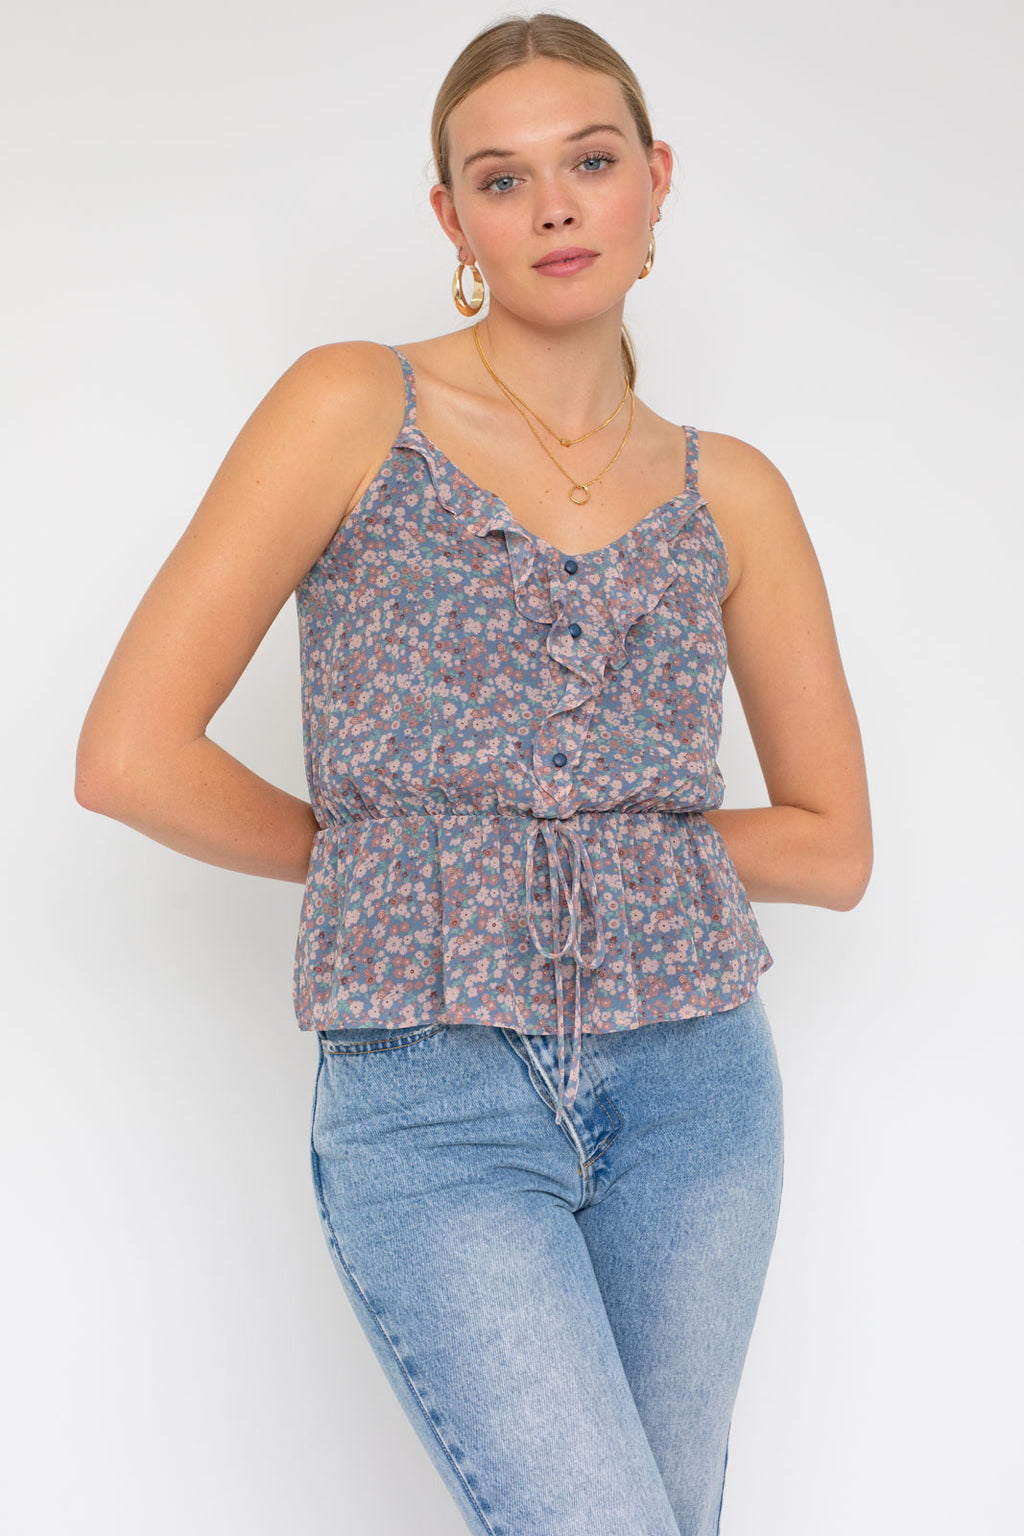 Sleeveless Cami (Plus Size - Mocha) – In Pursuit Mobile Boutique